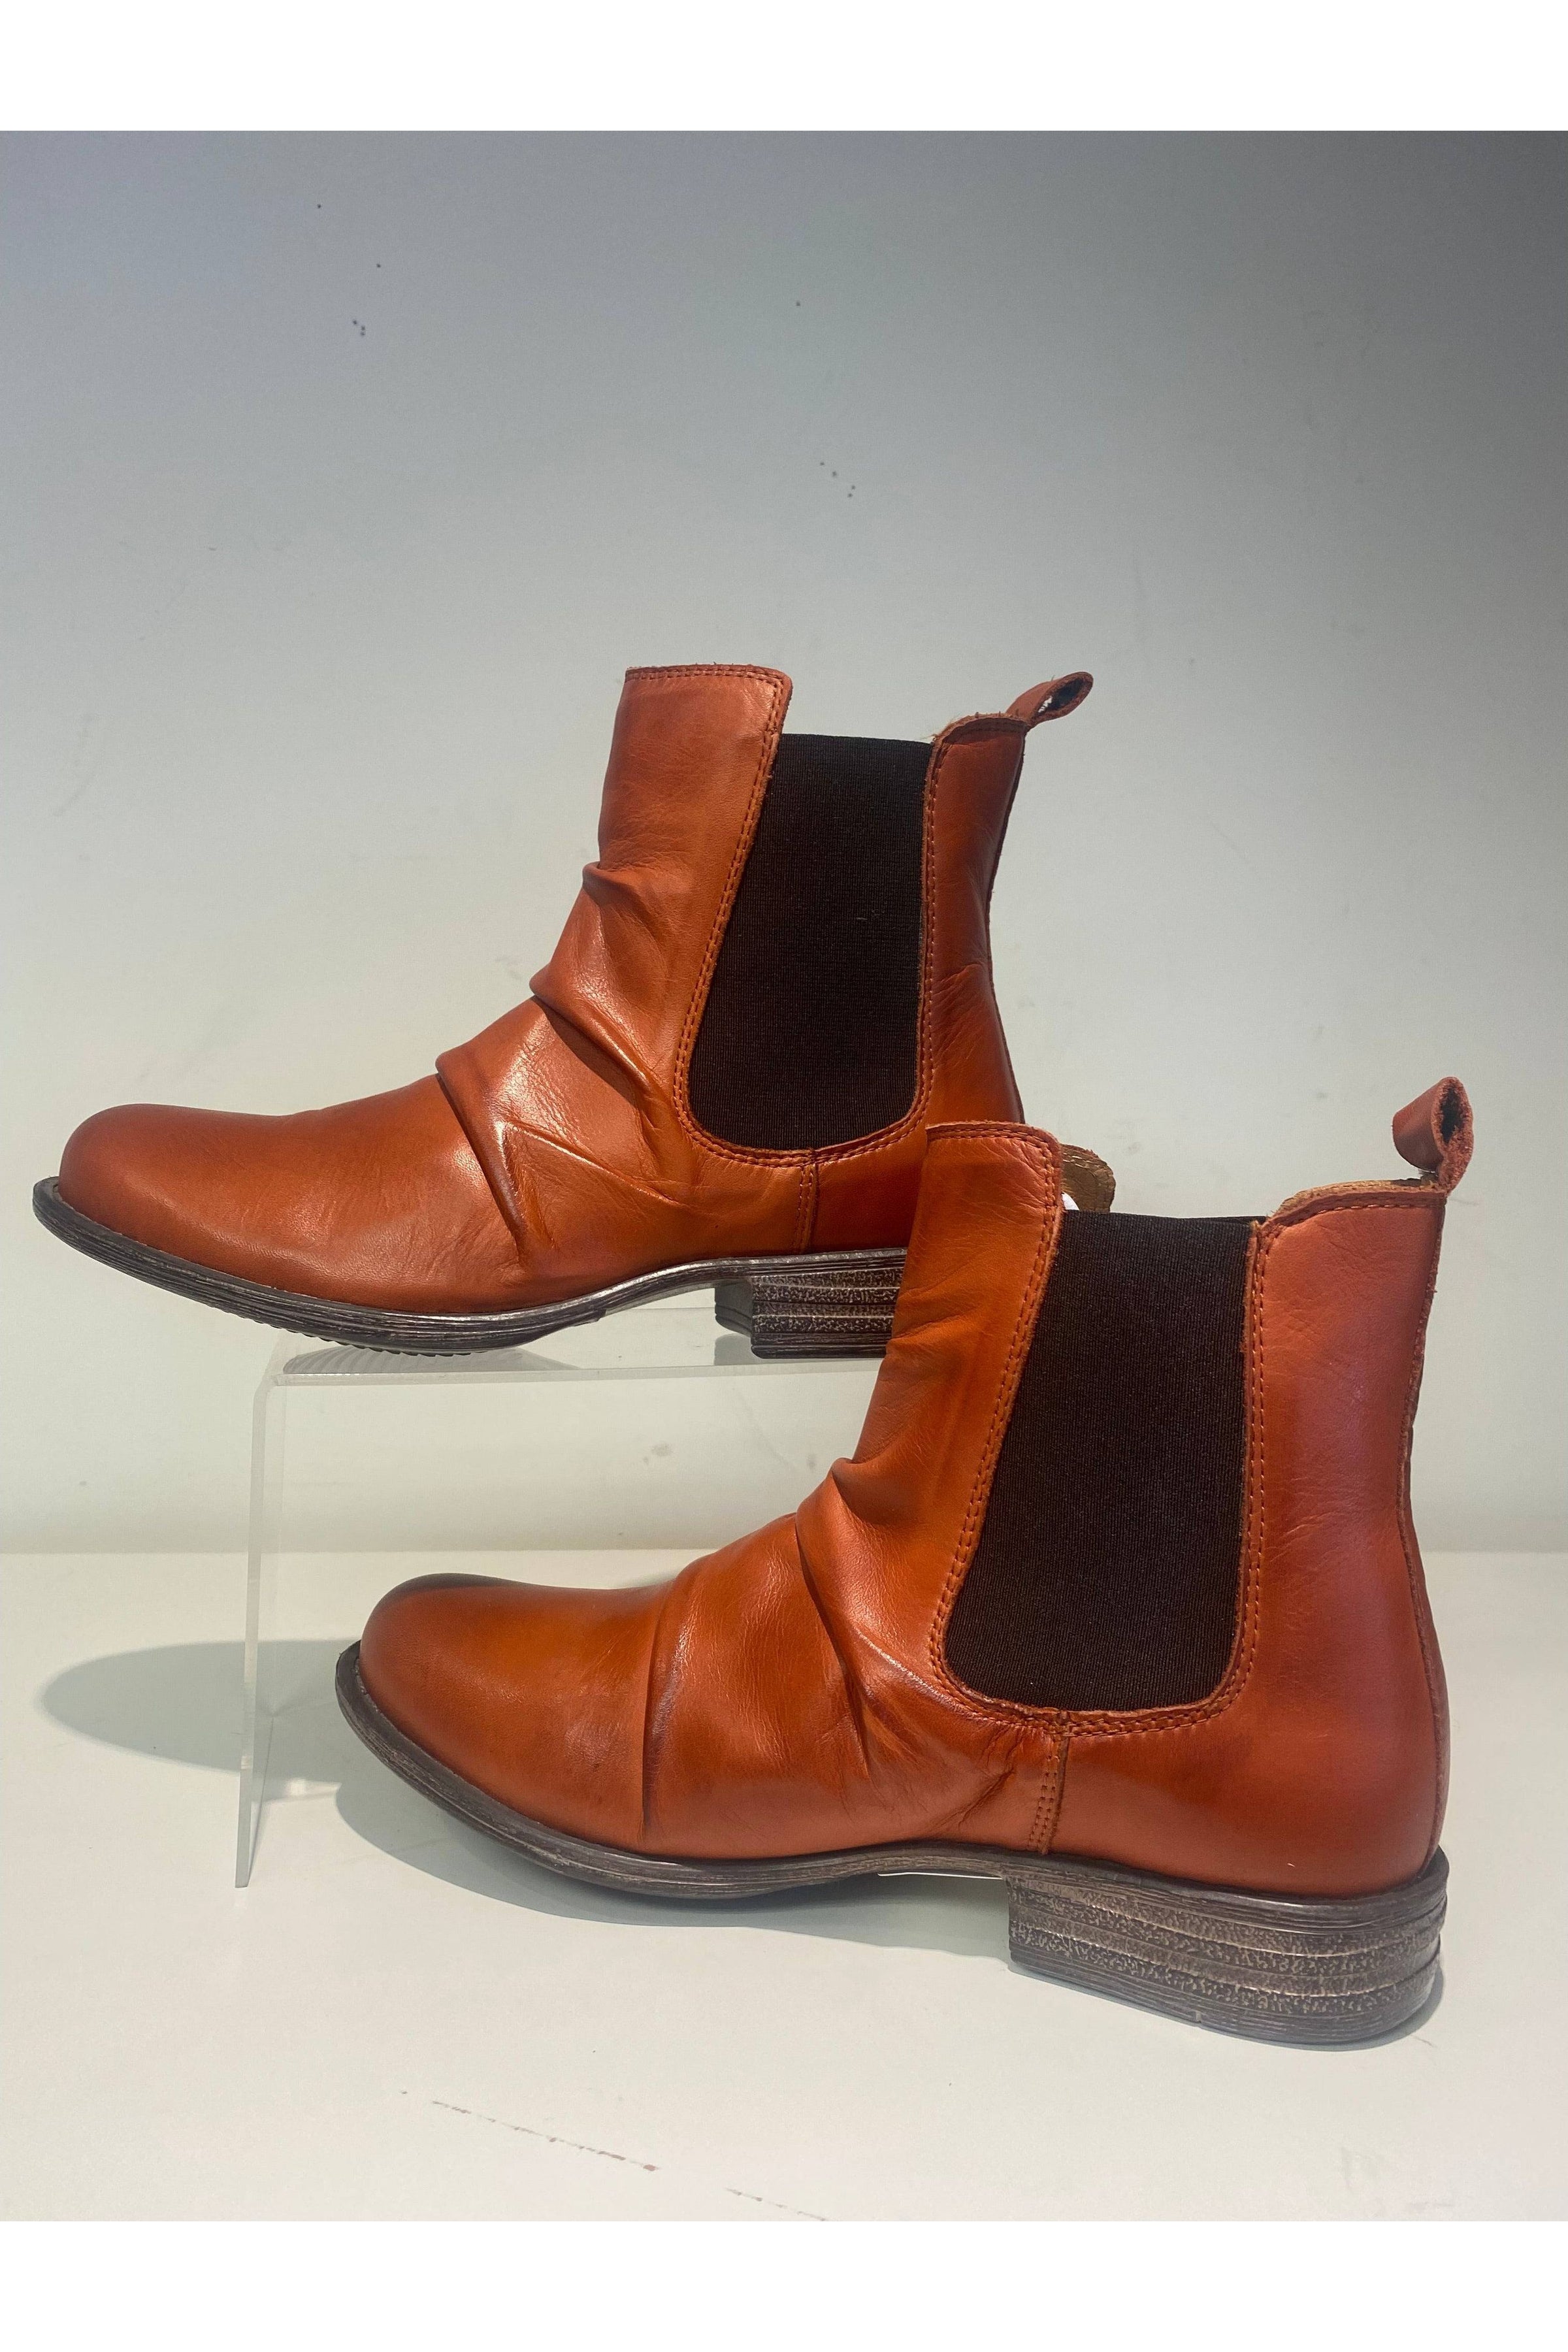 Miz Mooz Lissie Antique Boot, pair